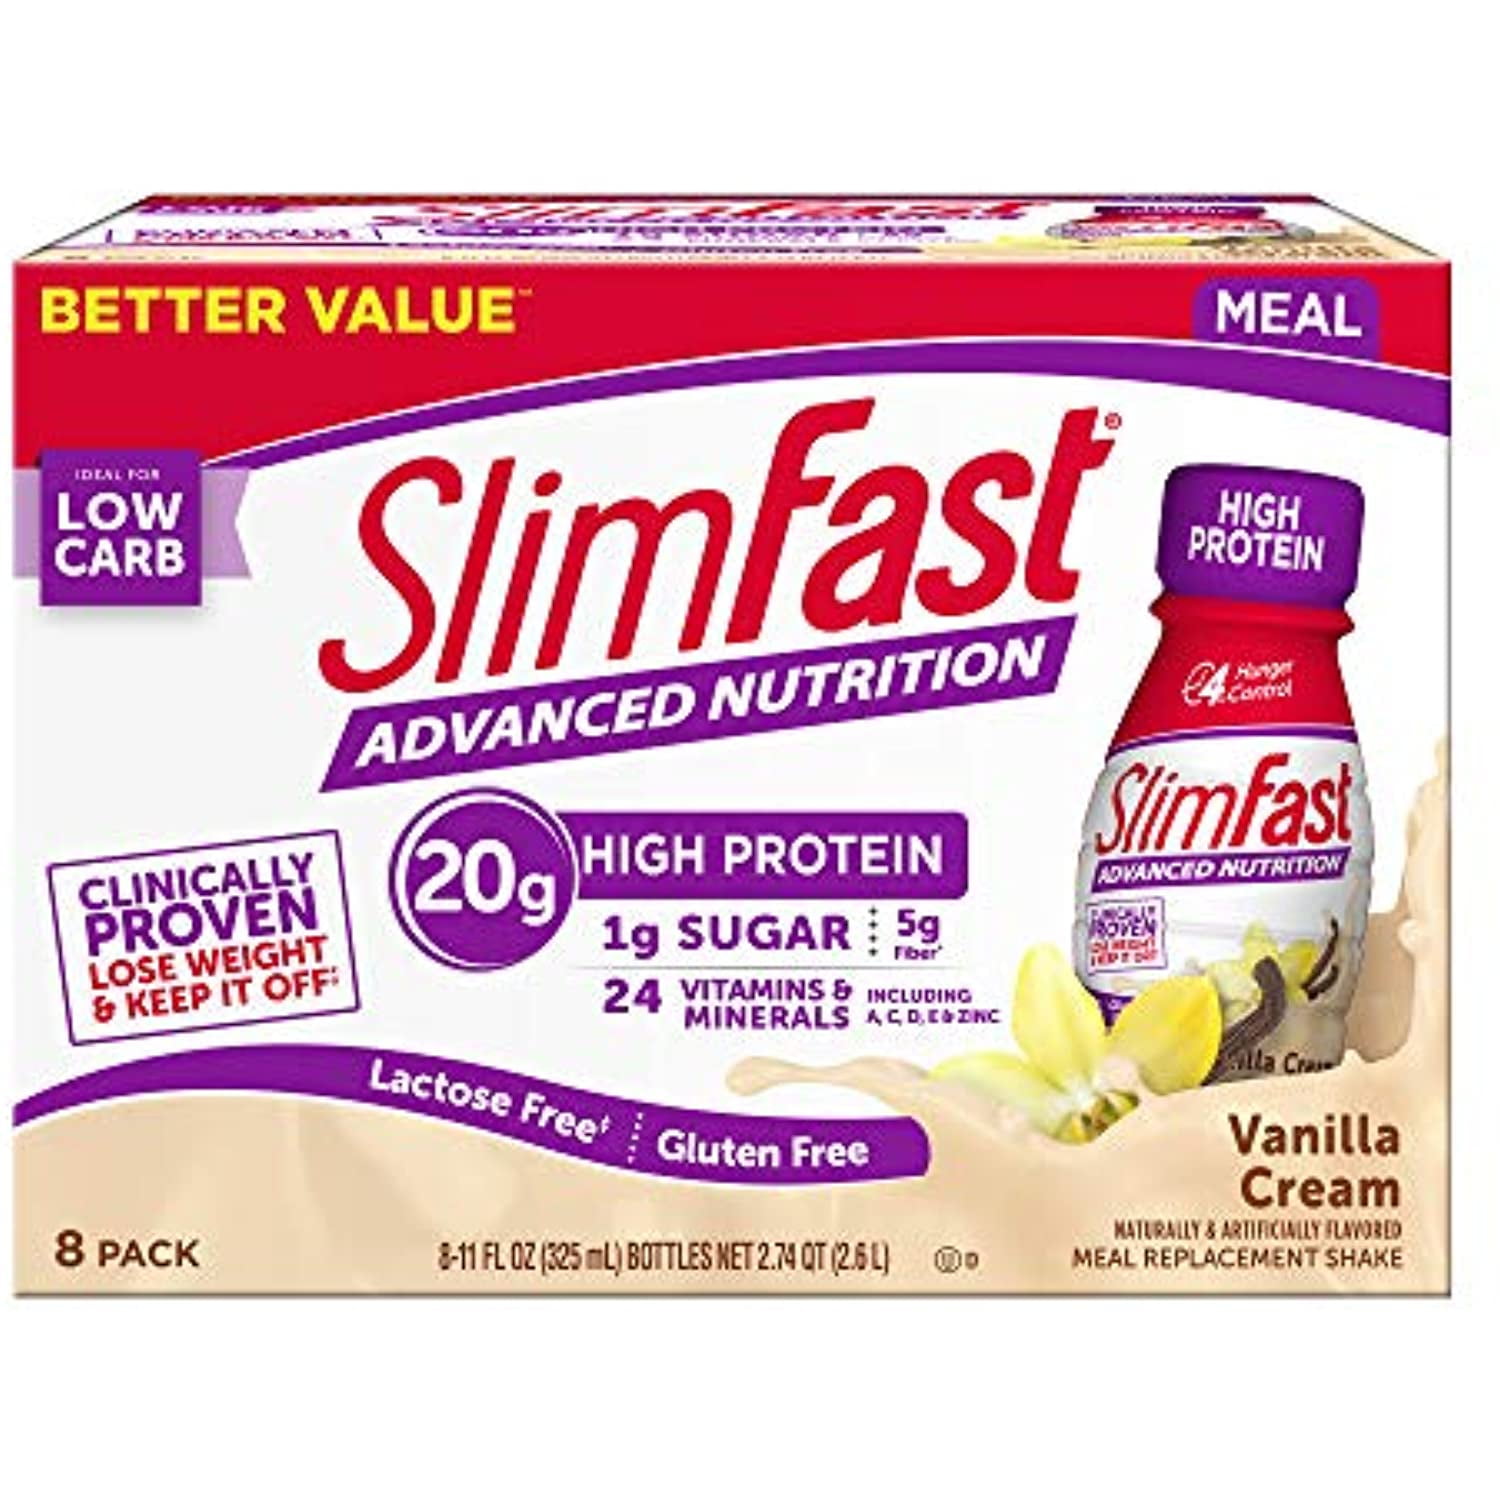 SlimFast Advanced Creamy Vanilla Keto Fuel Shake 10 Servings 320g